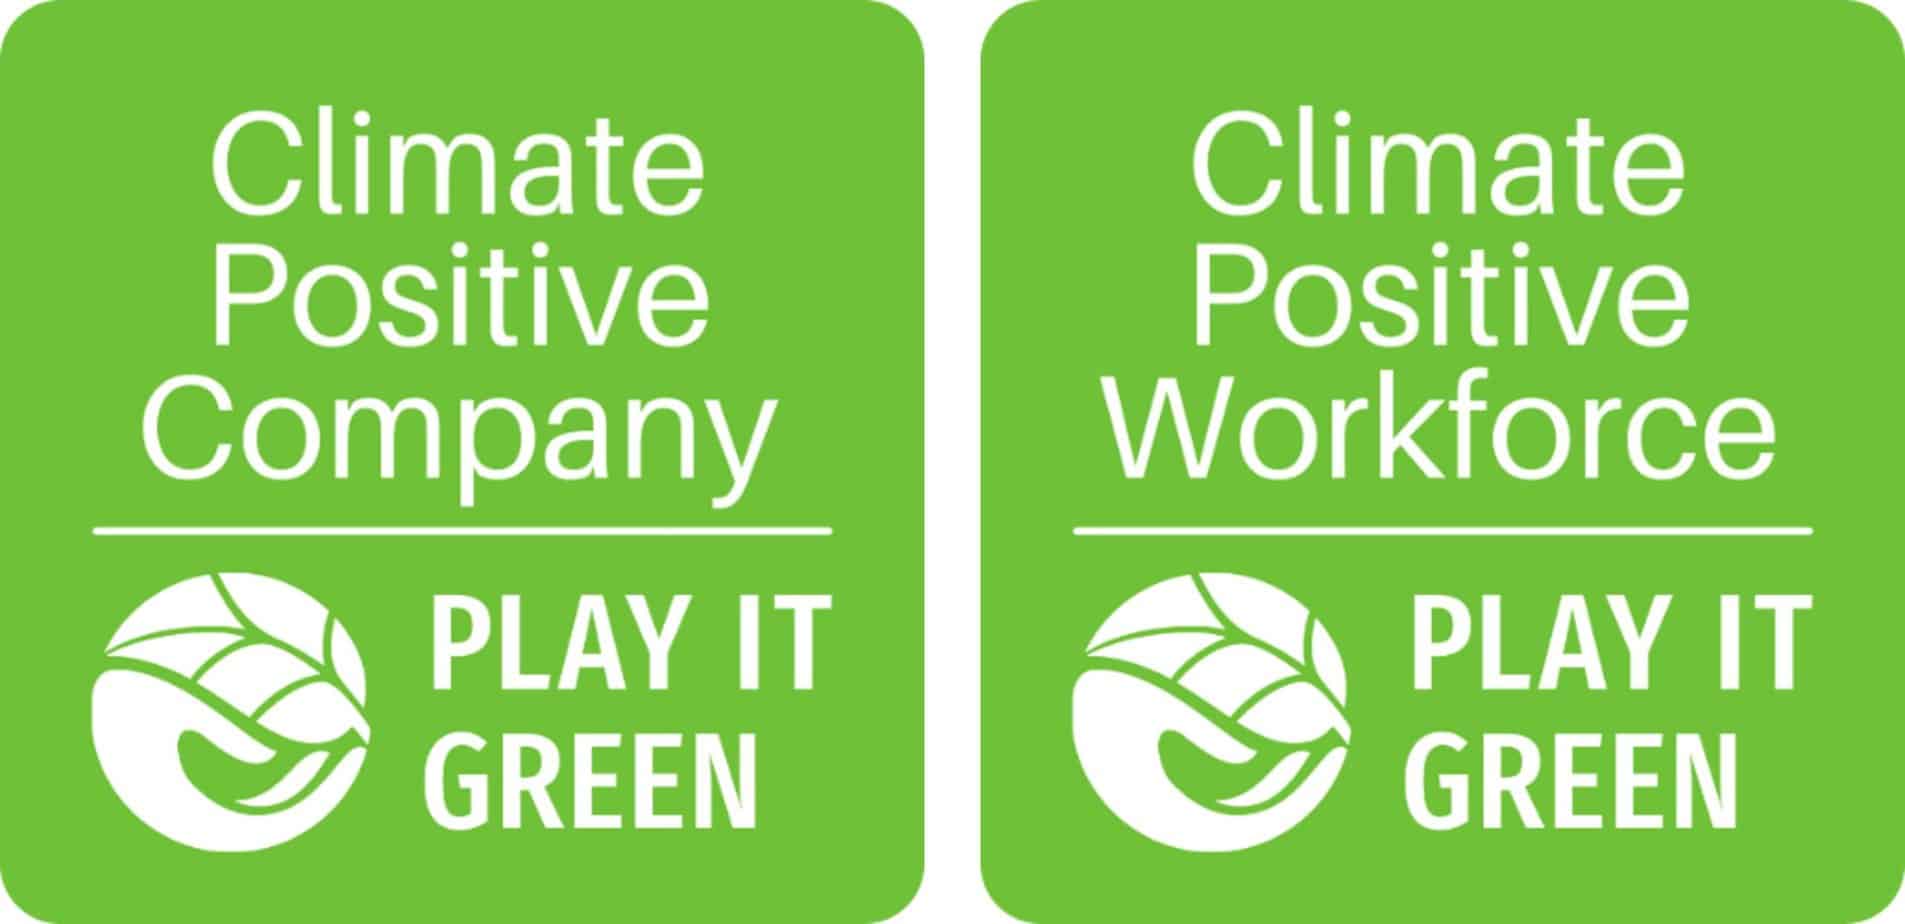 climate positive business